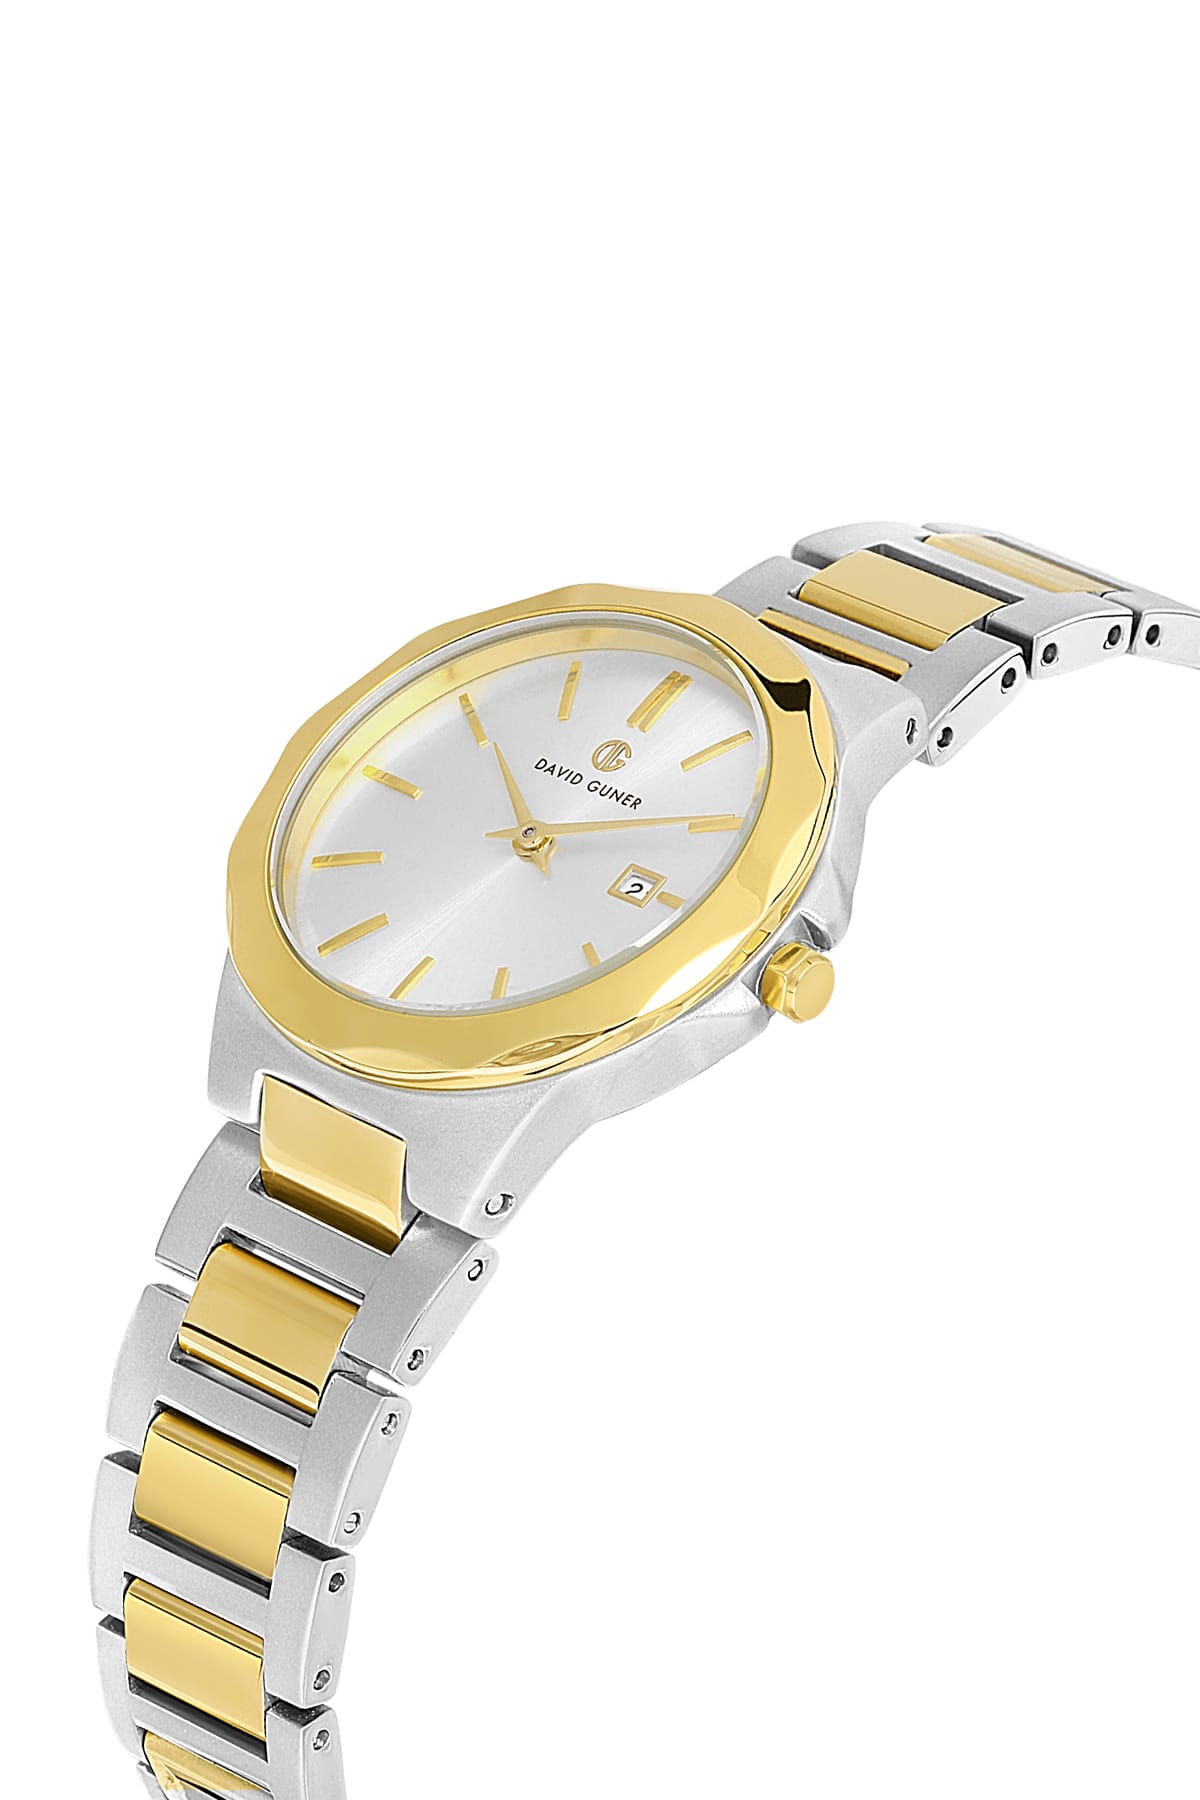 DAVID GUNER Silver Dial Yellow Silver Plated Women's Wristwatch with Calendar